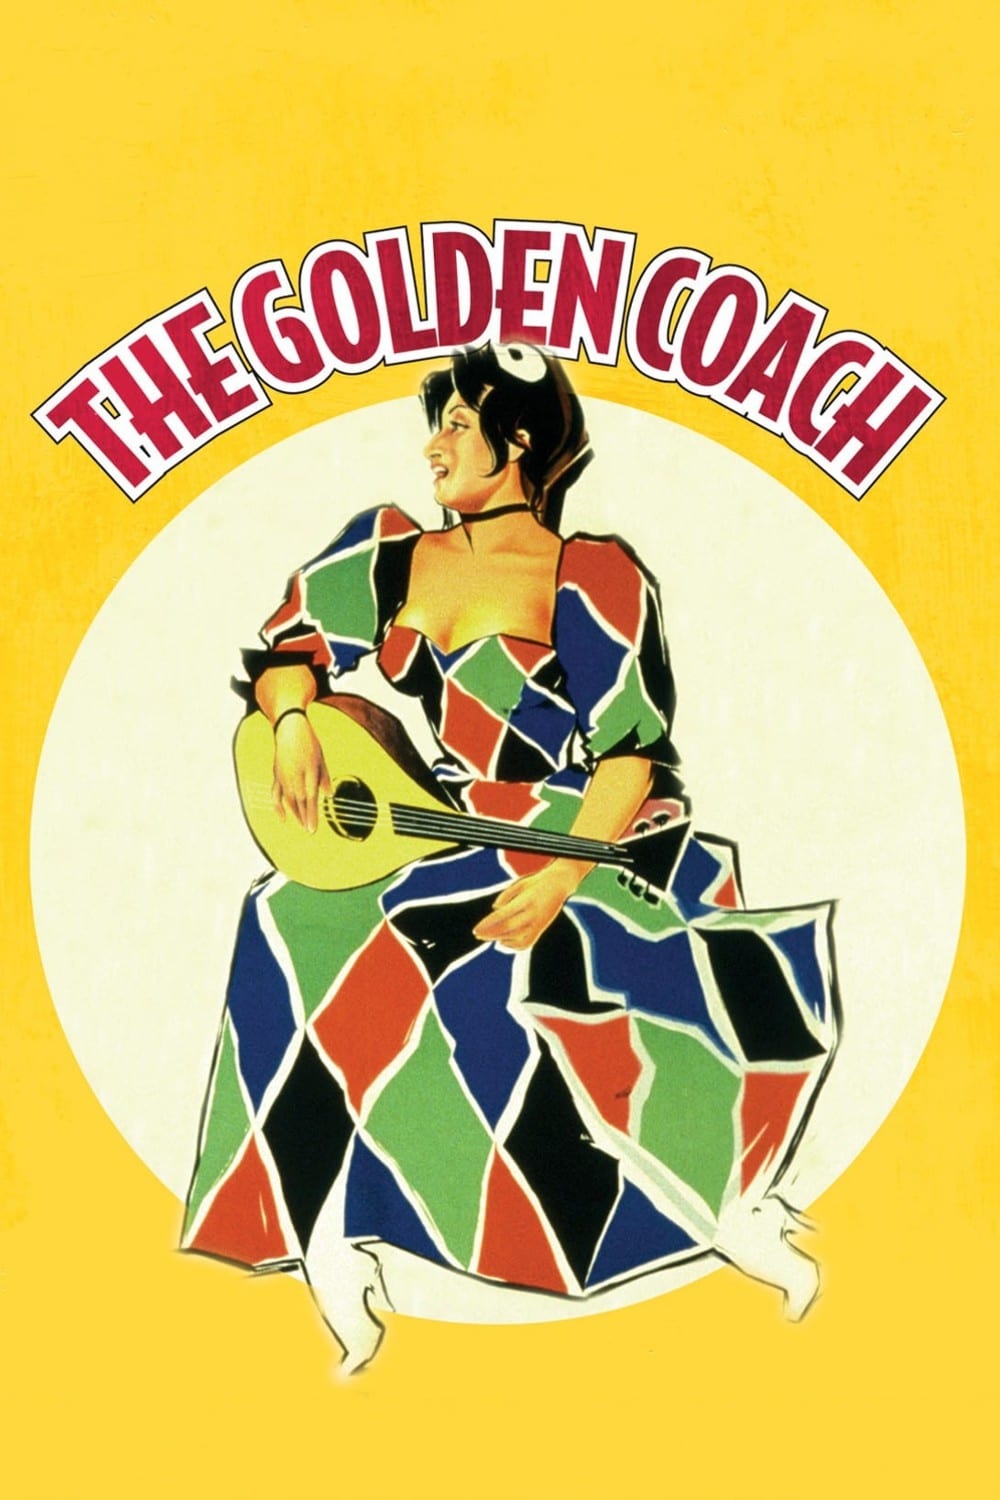 The Golden Coach (1952)